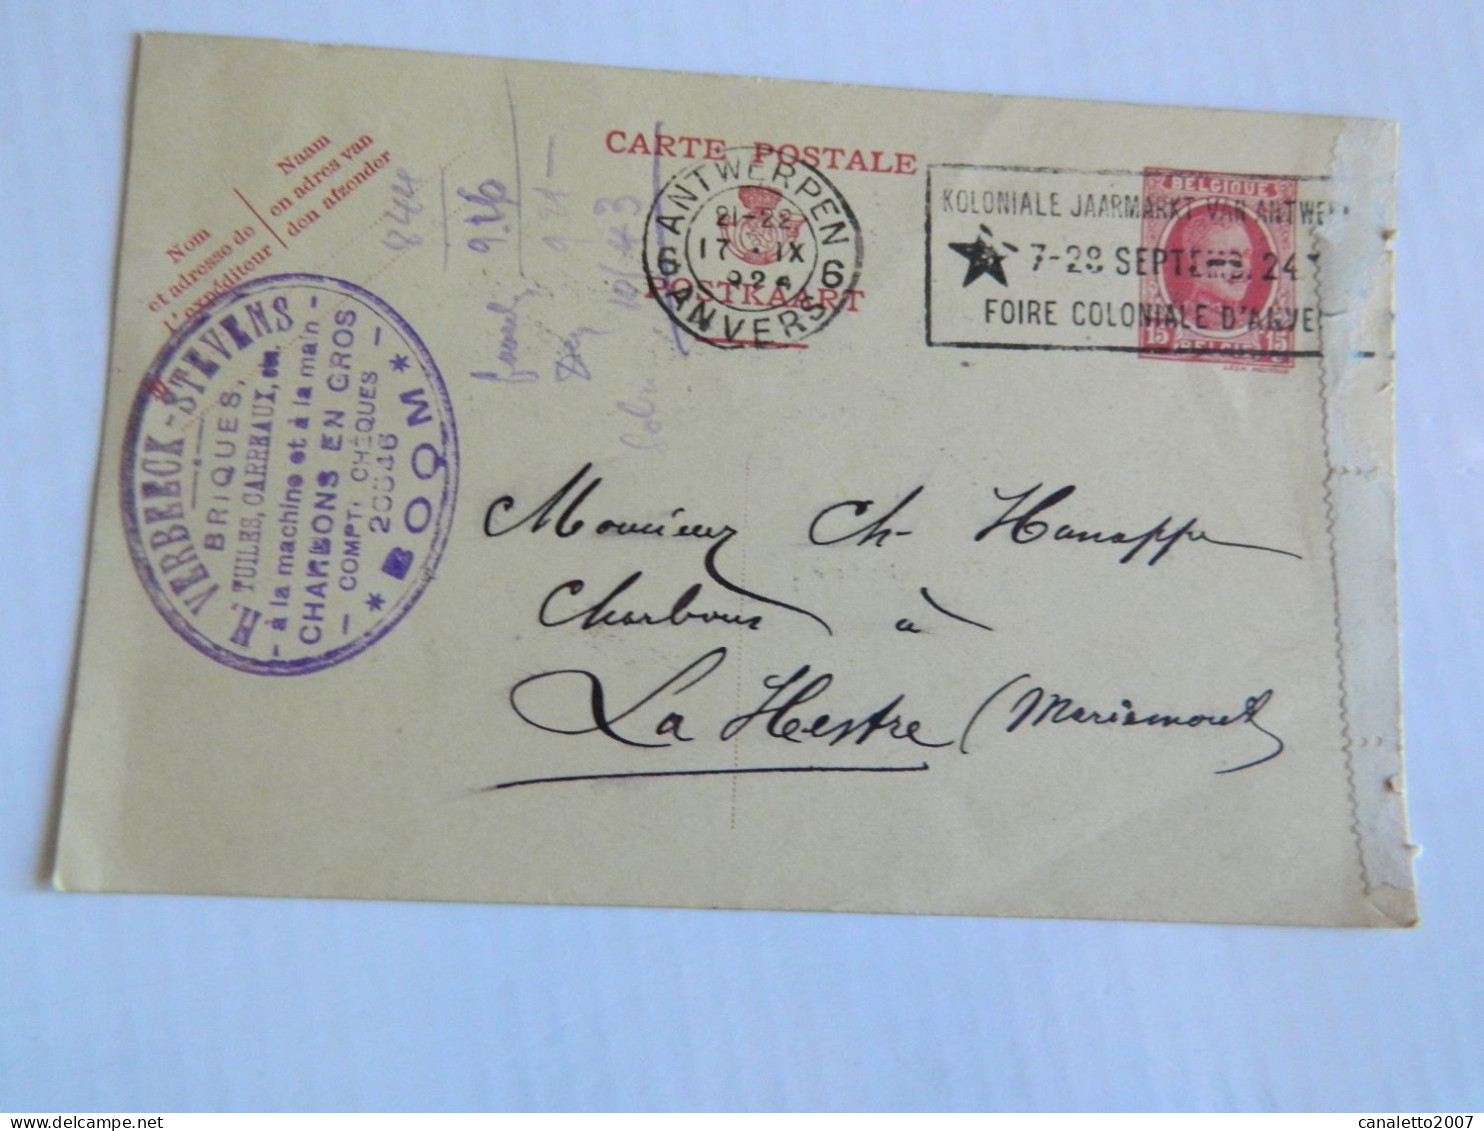 BOOM+BELGIQUE:ENTIER POSTAL DE 1924 AVEC CACHET DE VERBEECK-STEVENS -BRIQUES-TUILLES CARREAUX  CHARBON-A BOOM - Cartes Postales 1909-1934